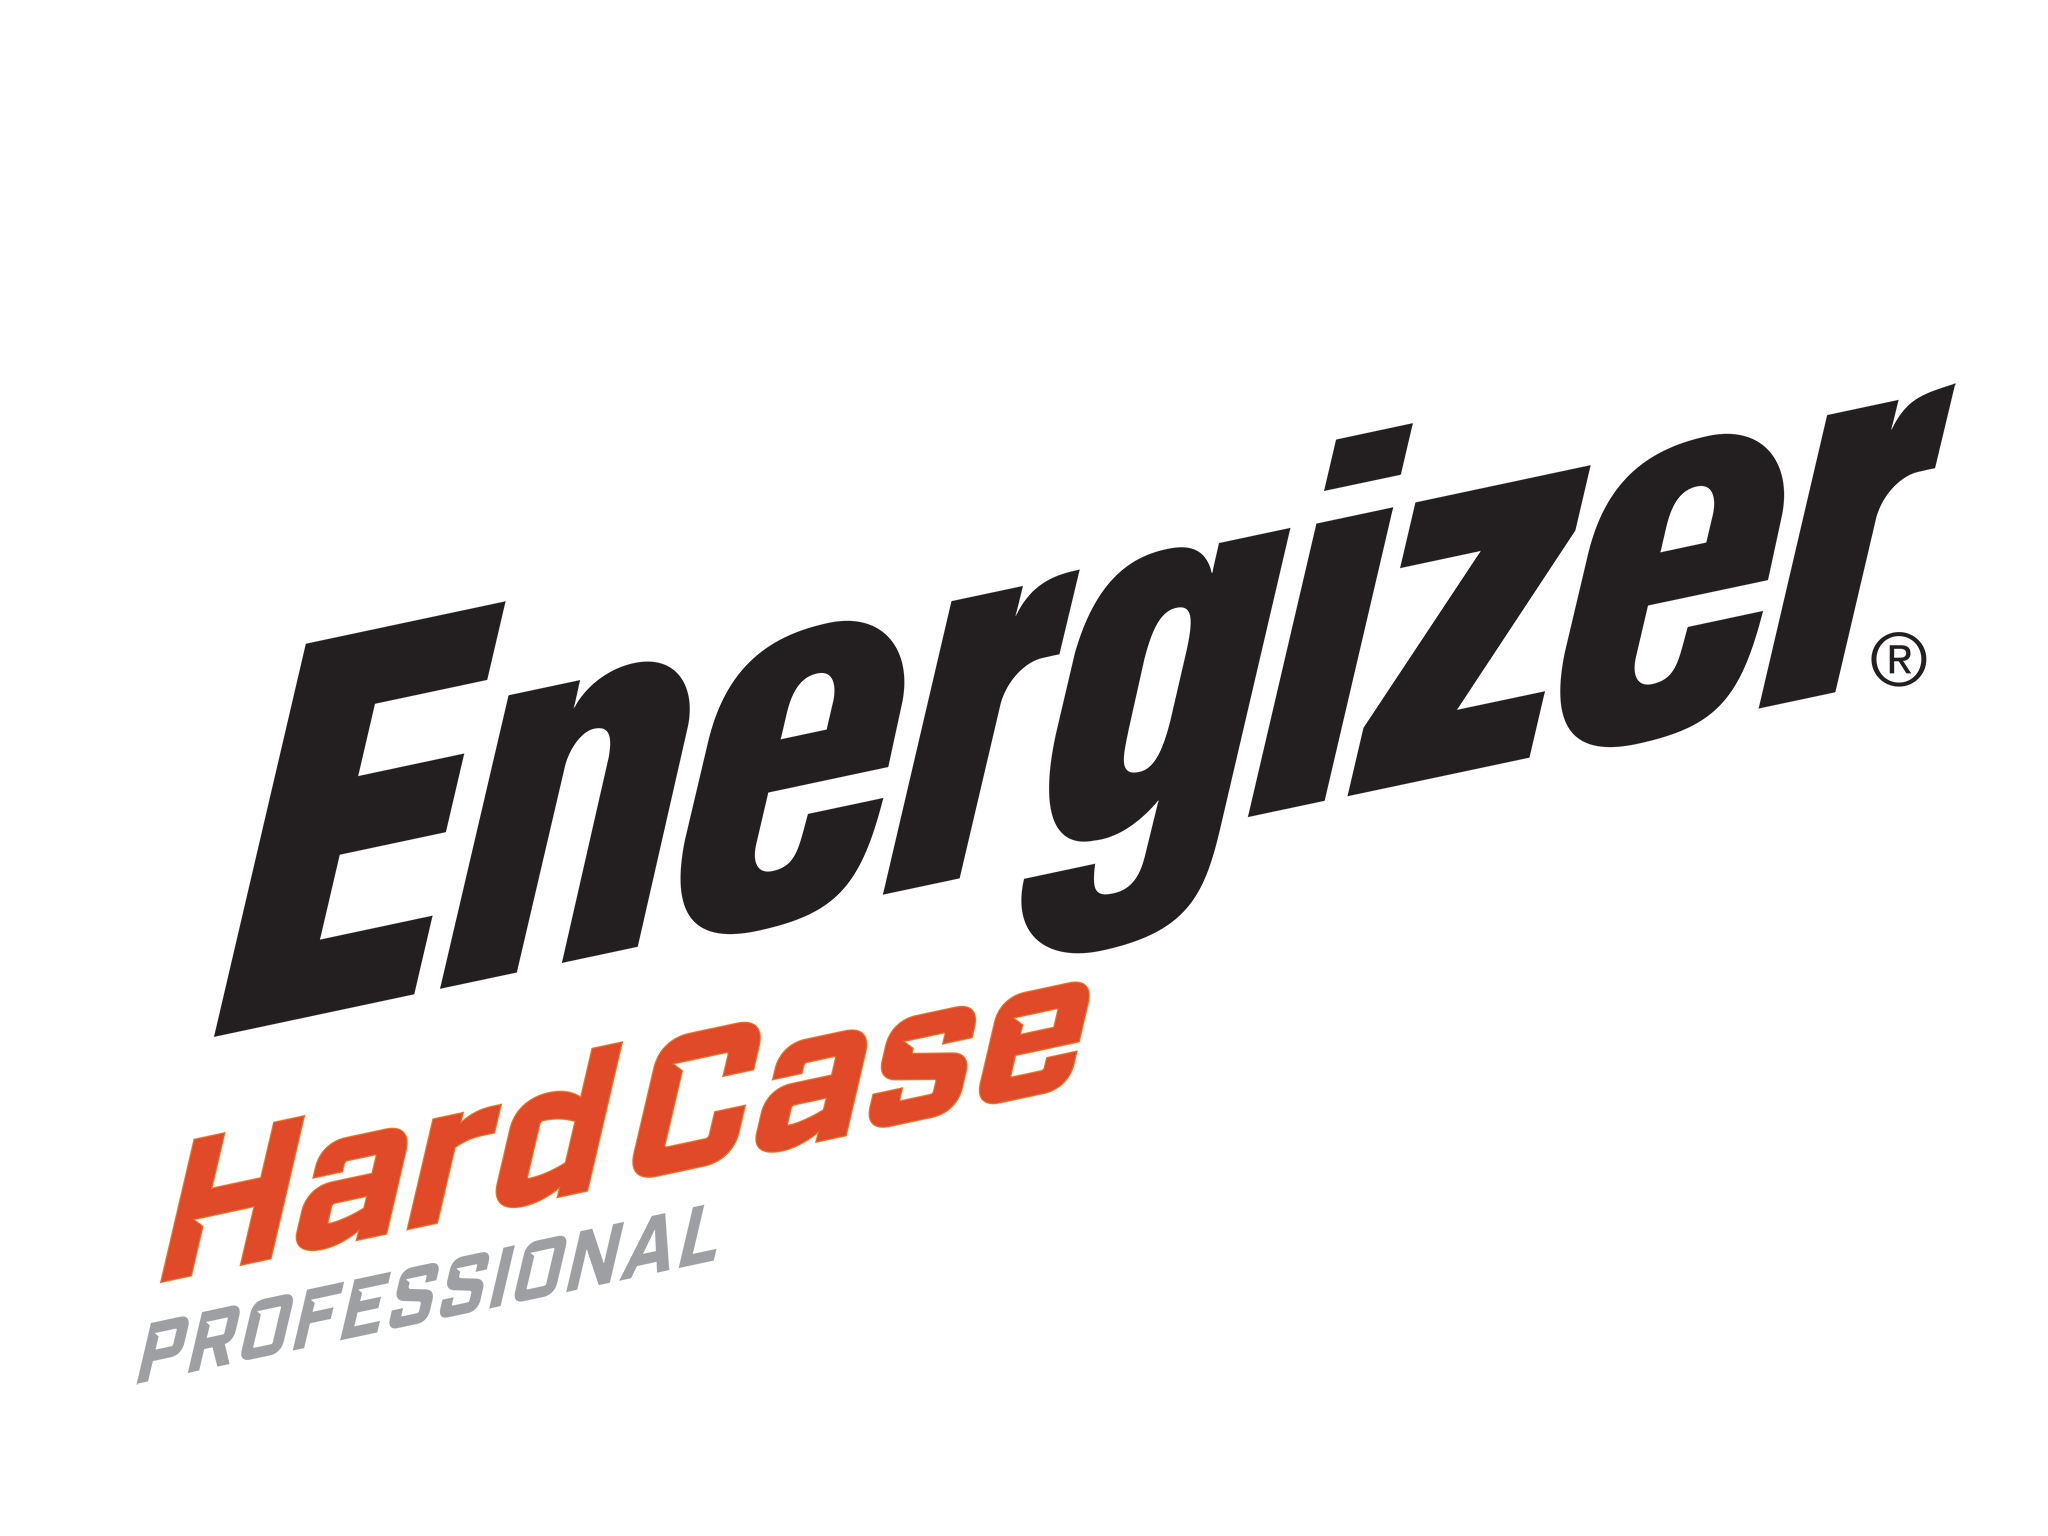 Energiser Hard Case